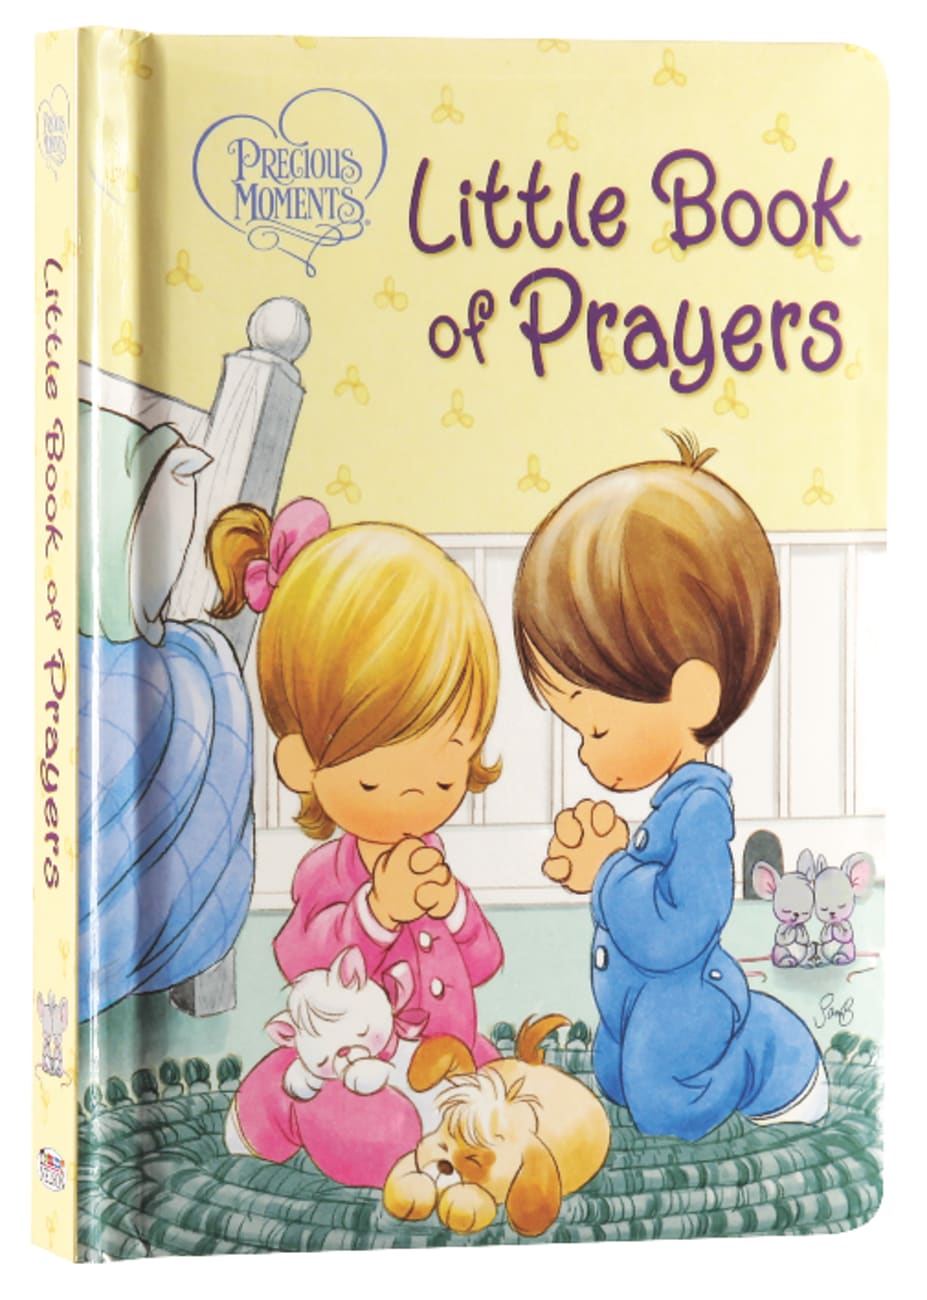 Little Book of Prayers (Precious Moments Series) Board Book